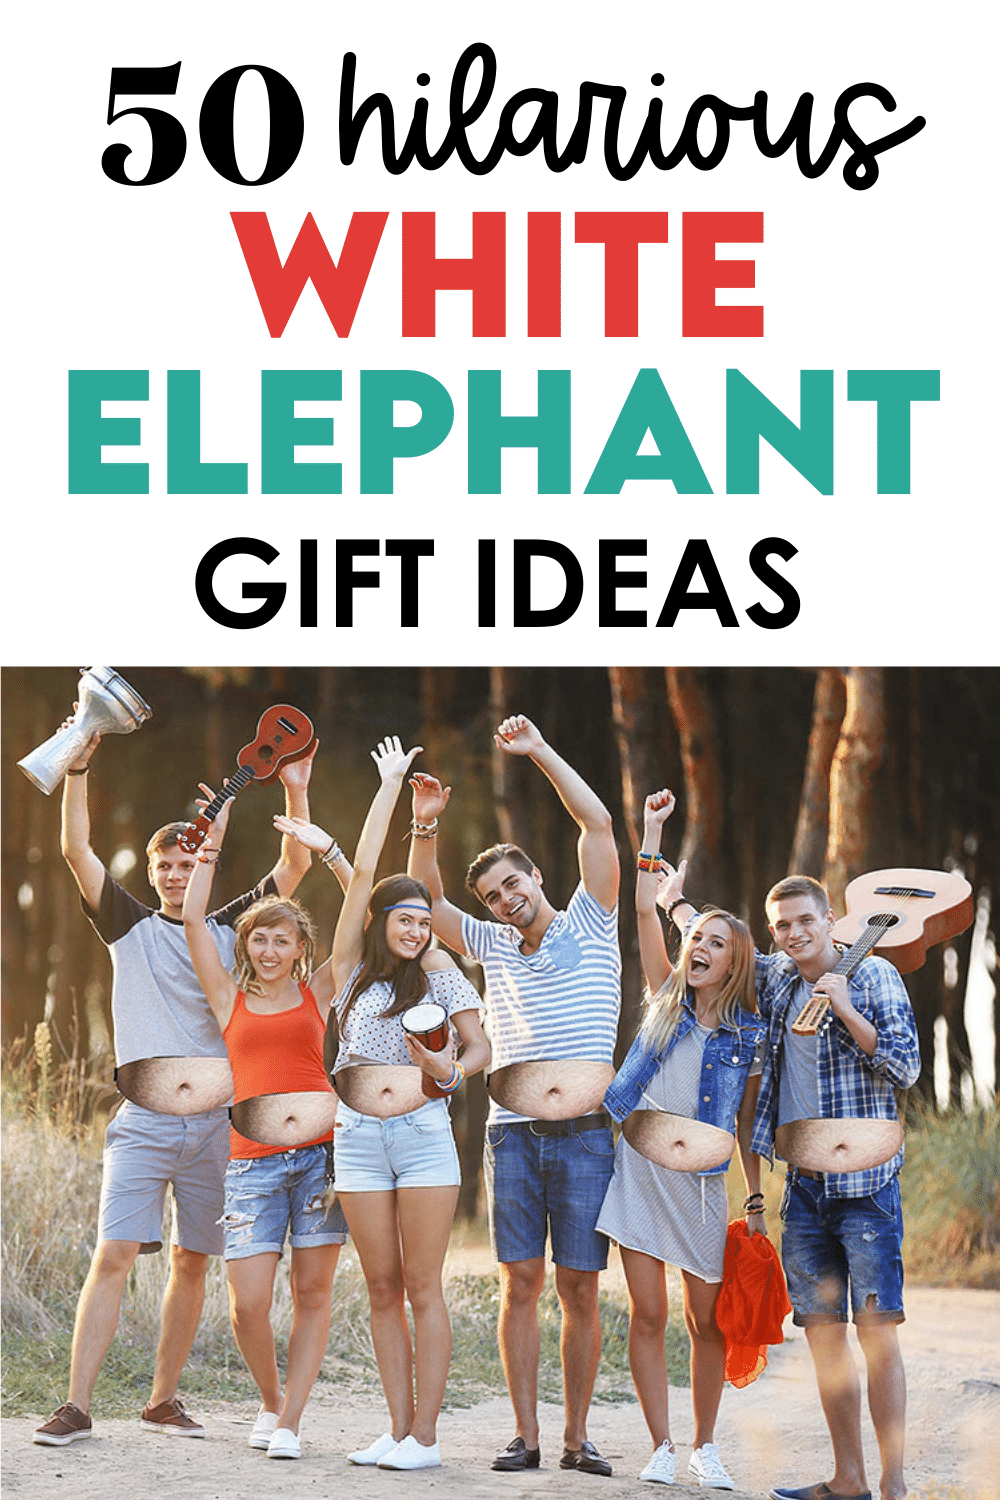 Funny White Elephant Gift Hilarious Party Game Game Night Jokes On You